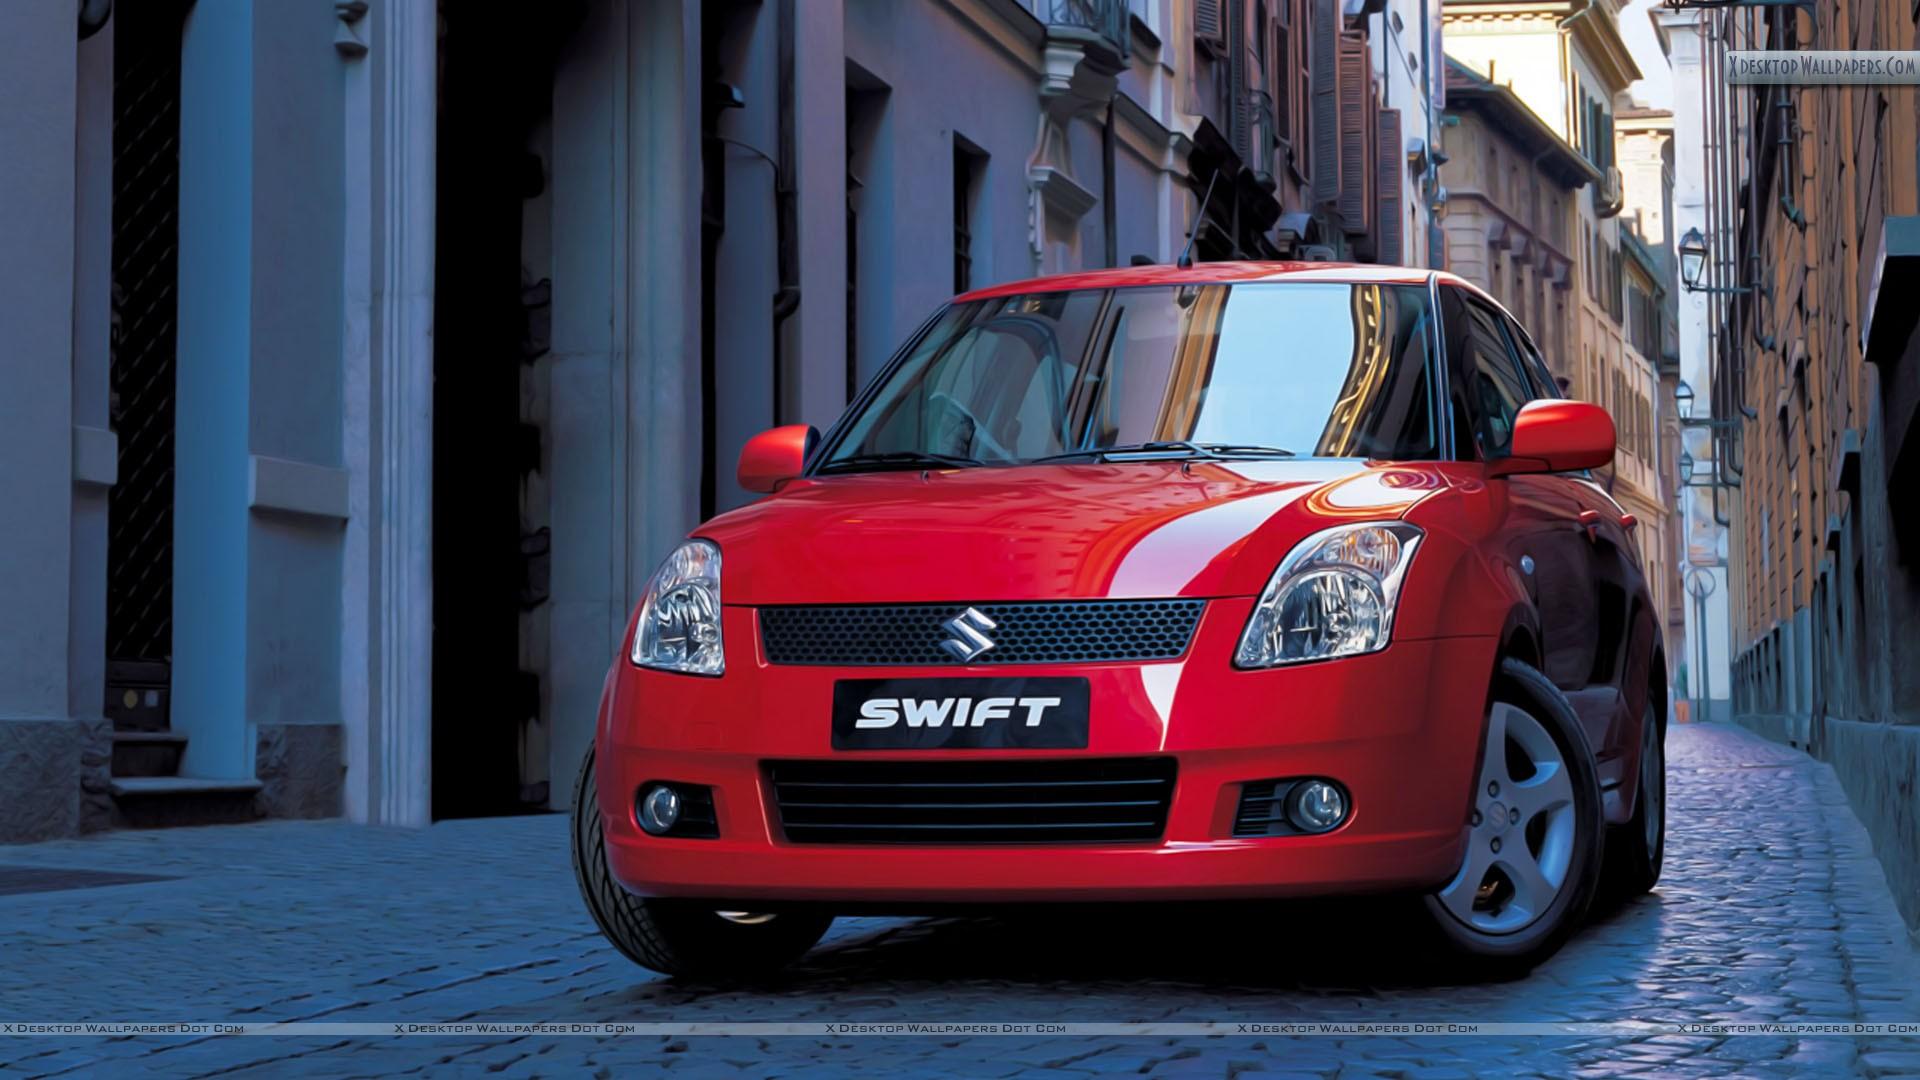 Suzuki Swift Wallpaper, Photo & Image in HD